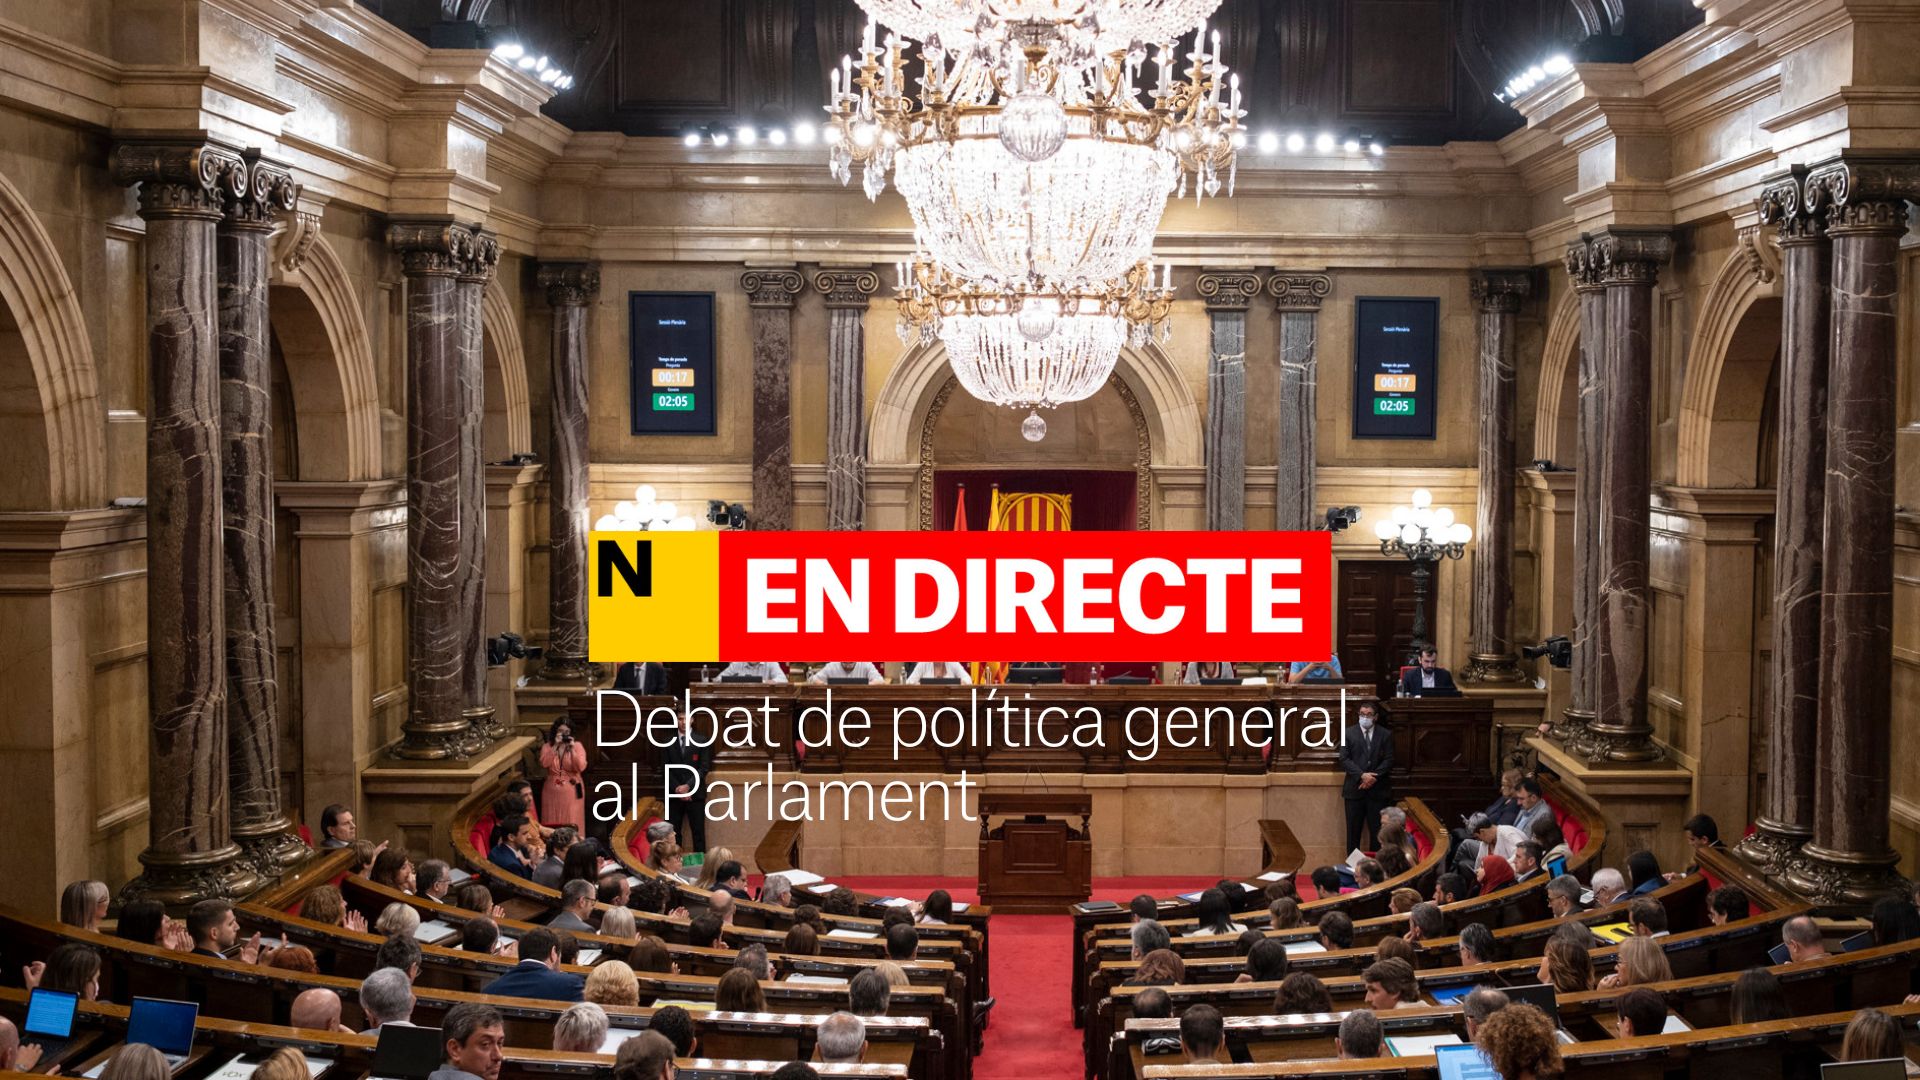 Debate de política general en el Parlament de Catalunya | DIRECTO